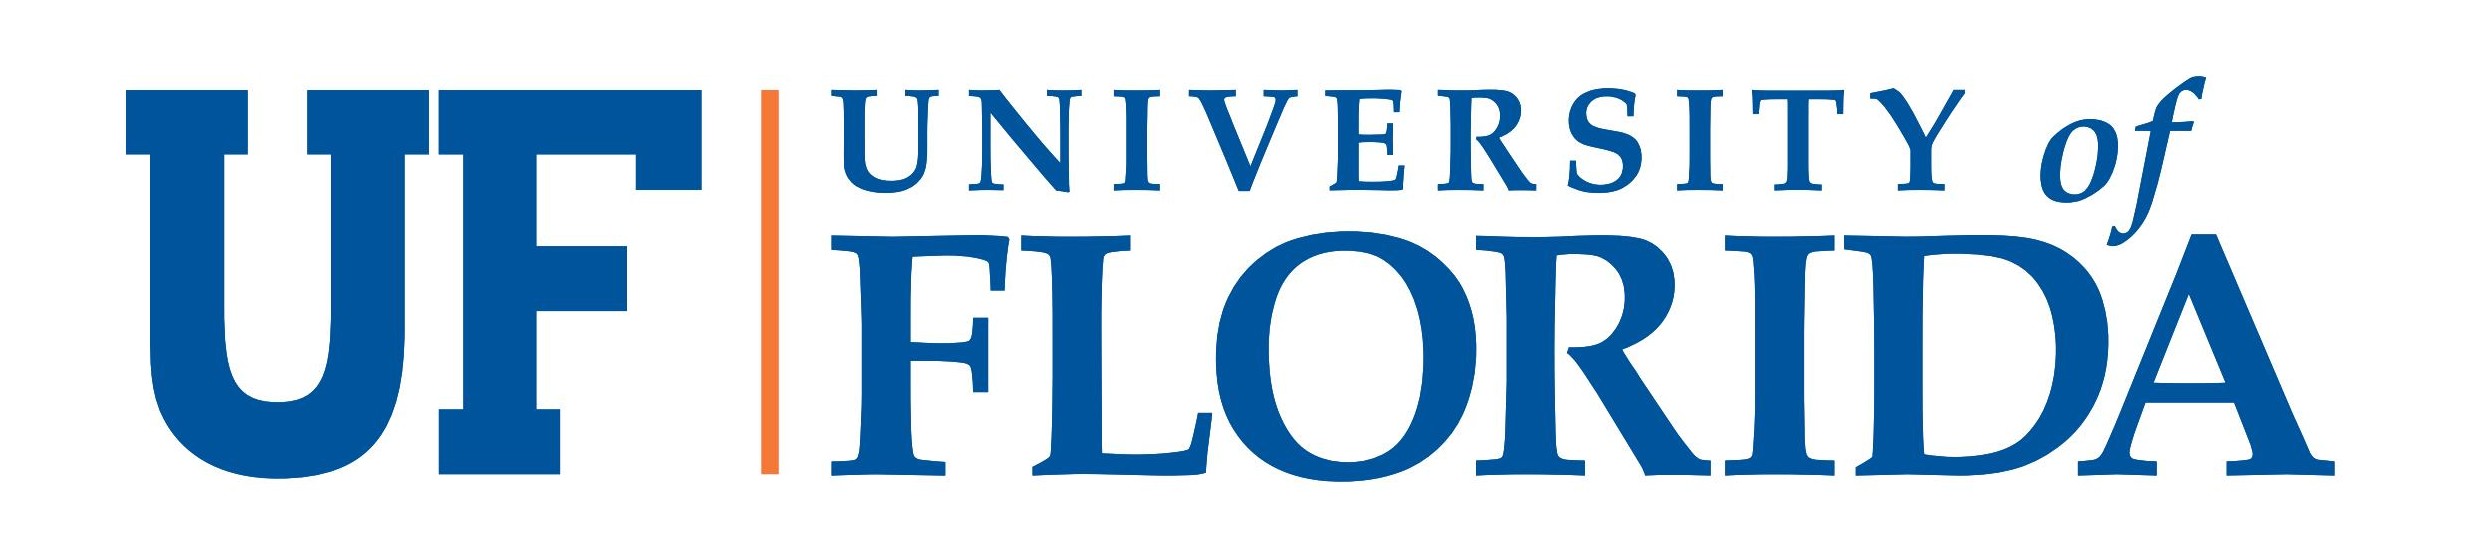 uf_university-of-florida.jpg